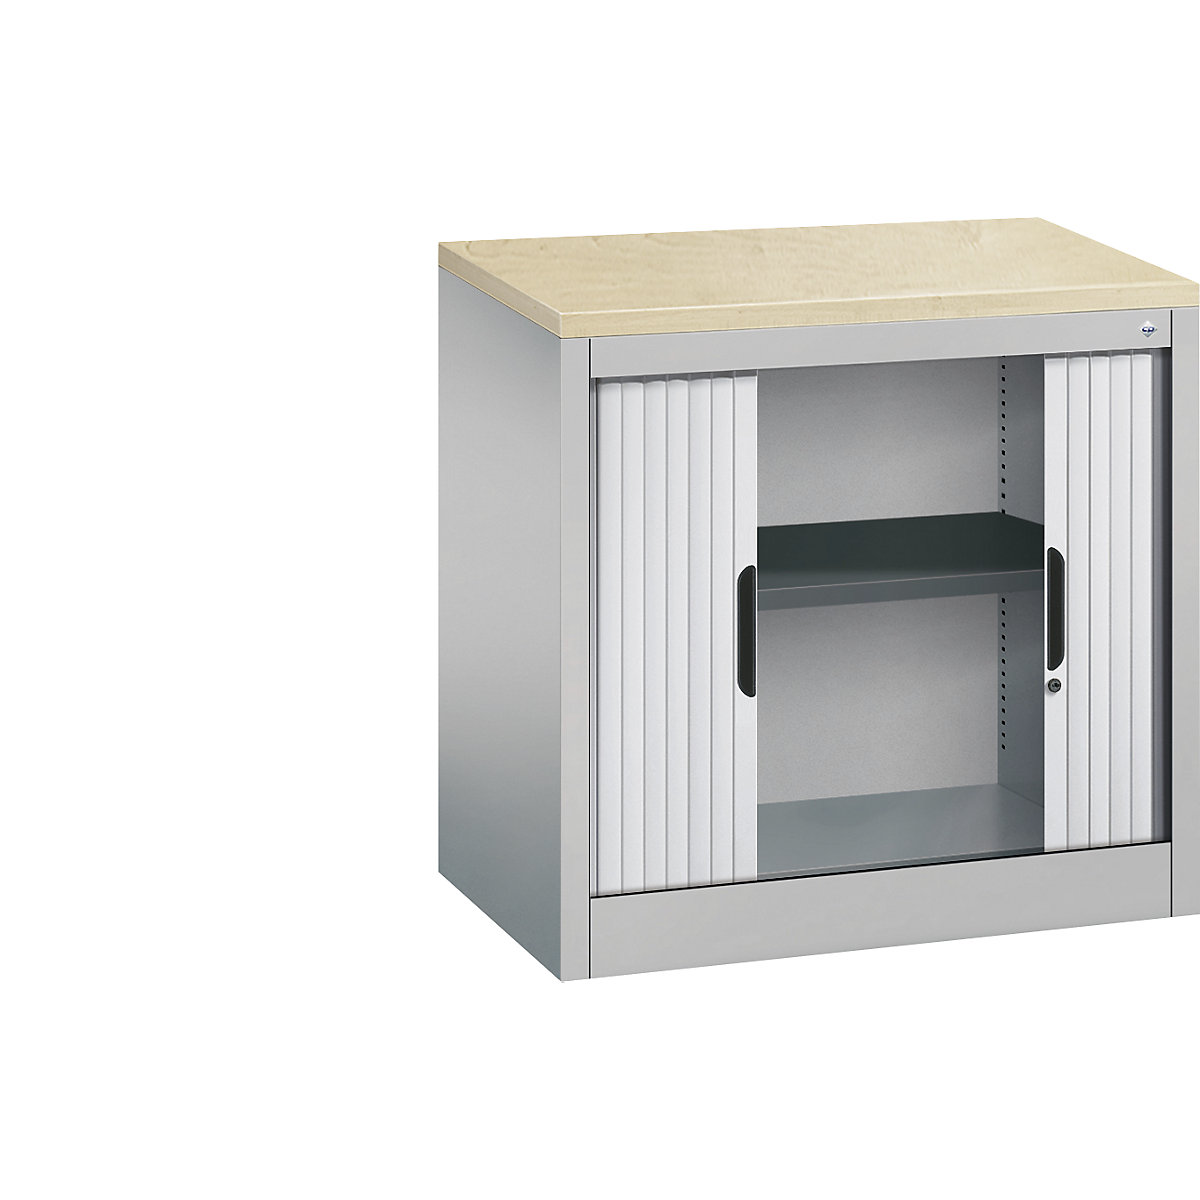 Roldeurkast met horizontale roldeuren – C+P, h x b x d = 720 x 800 x 420 mm, 1 legbord, 1,5 ordnerhoogte, blank aluminiumkleurig-7